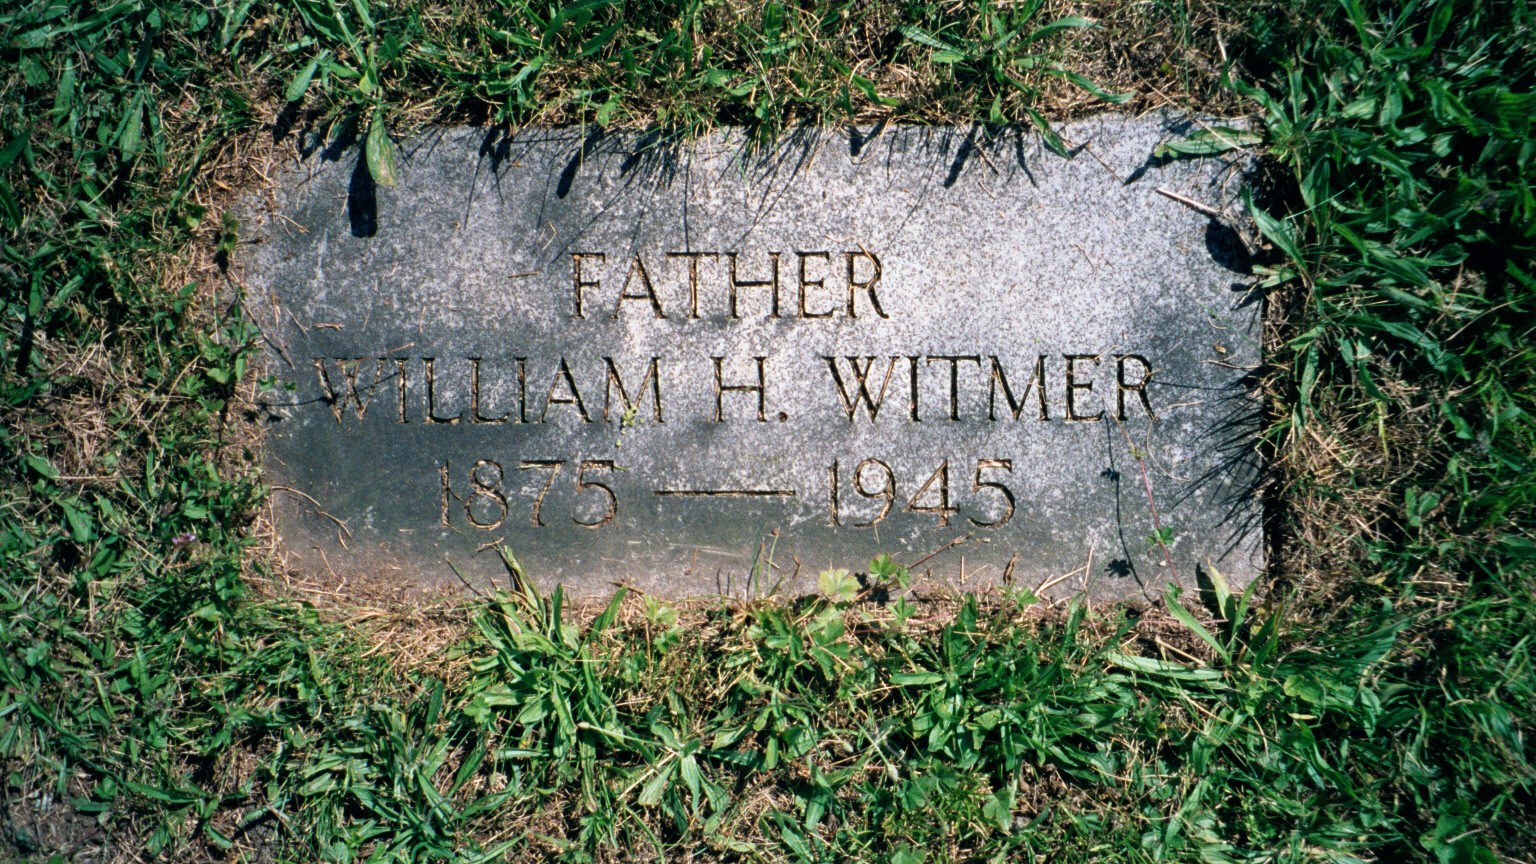 Wlliam H. Witmer 1878-1947
